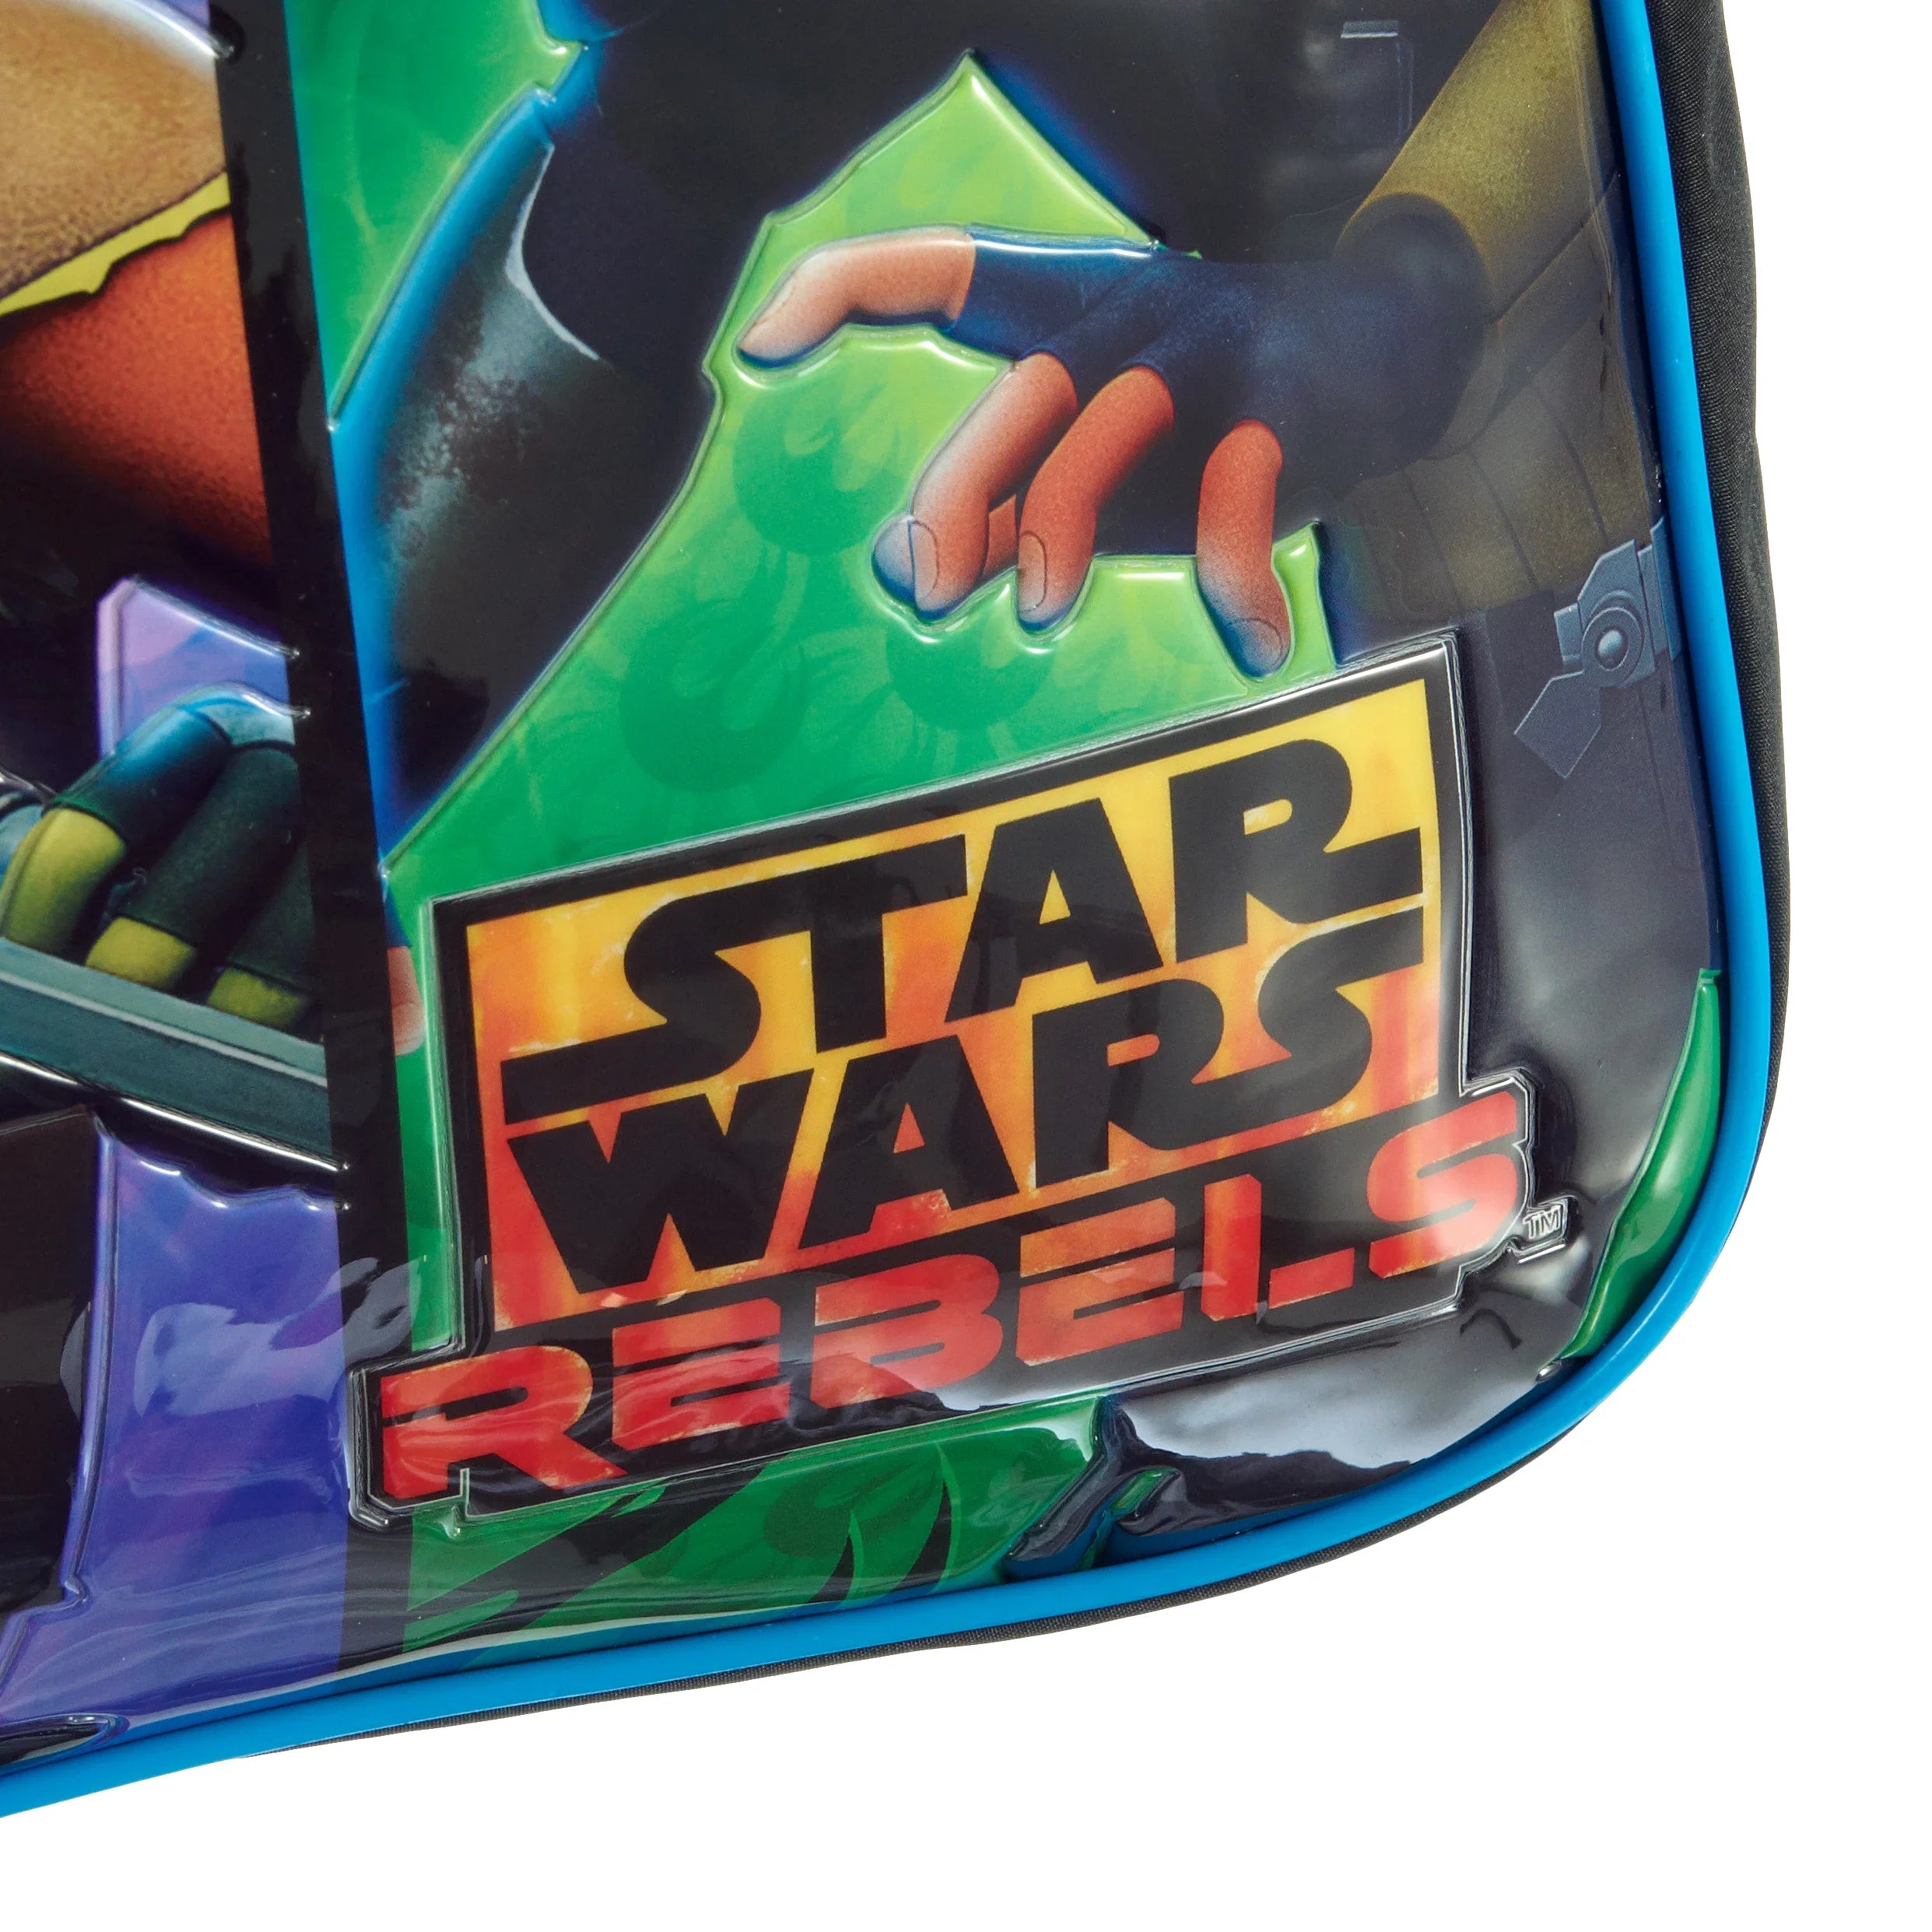 Disney Star Wars Rebels travel bag 40 cm - colorful